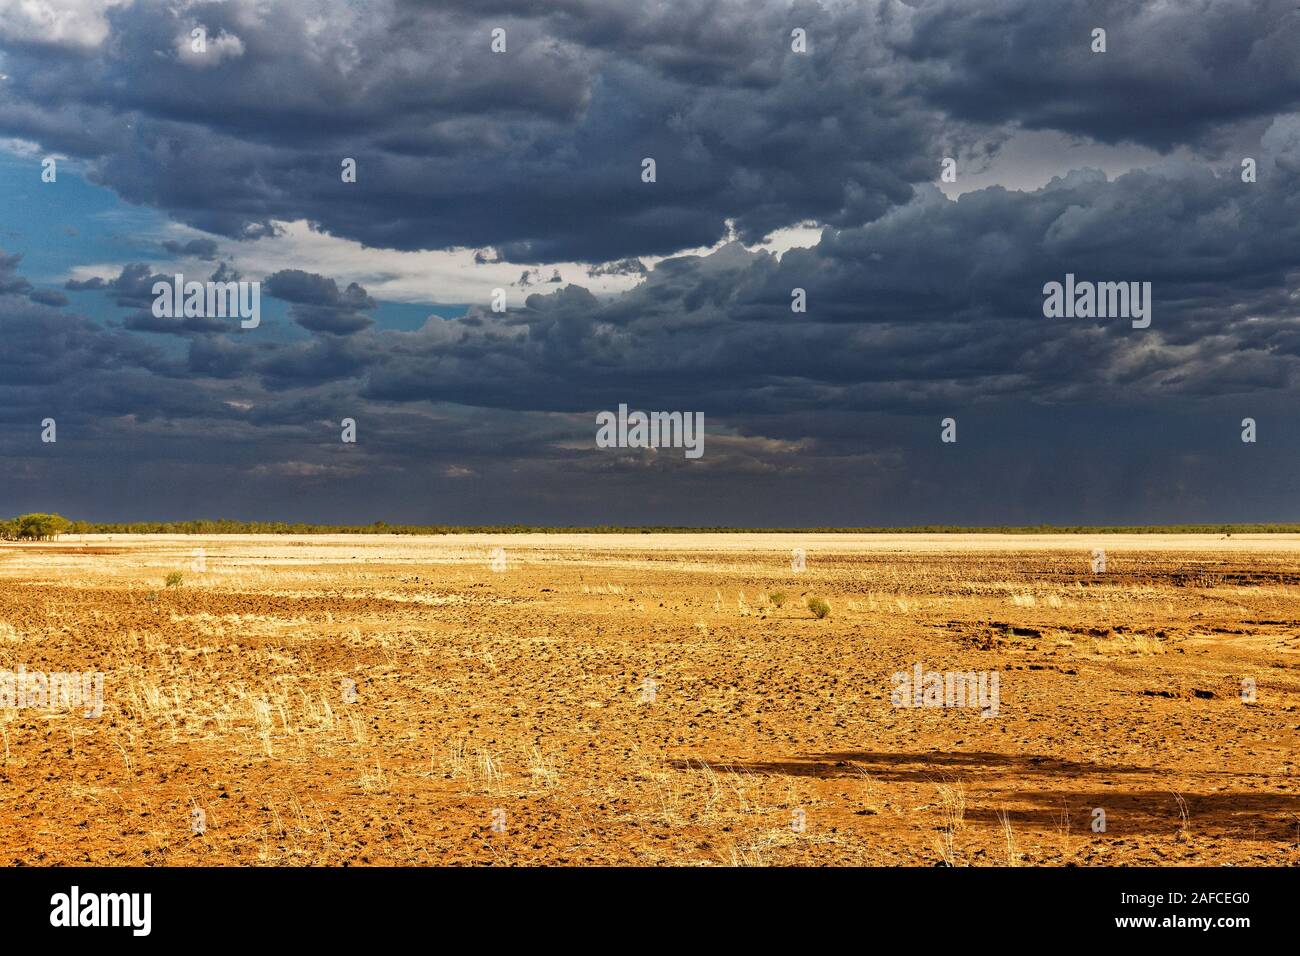 Savannah landscape with stormy sky, West Kimberley, Western Australia Stock Photo